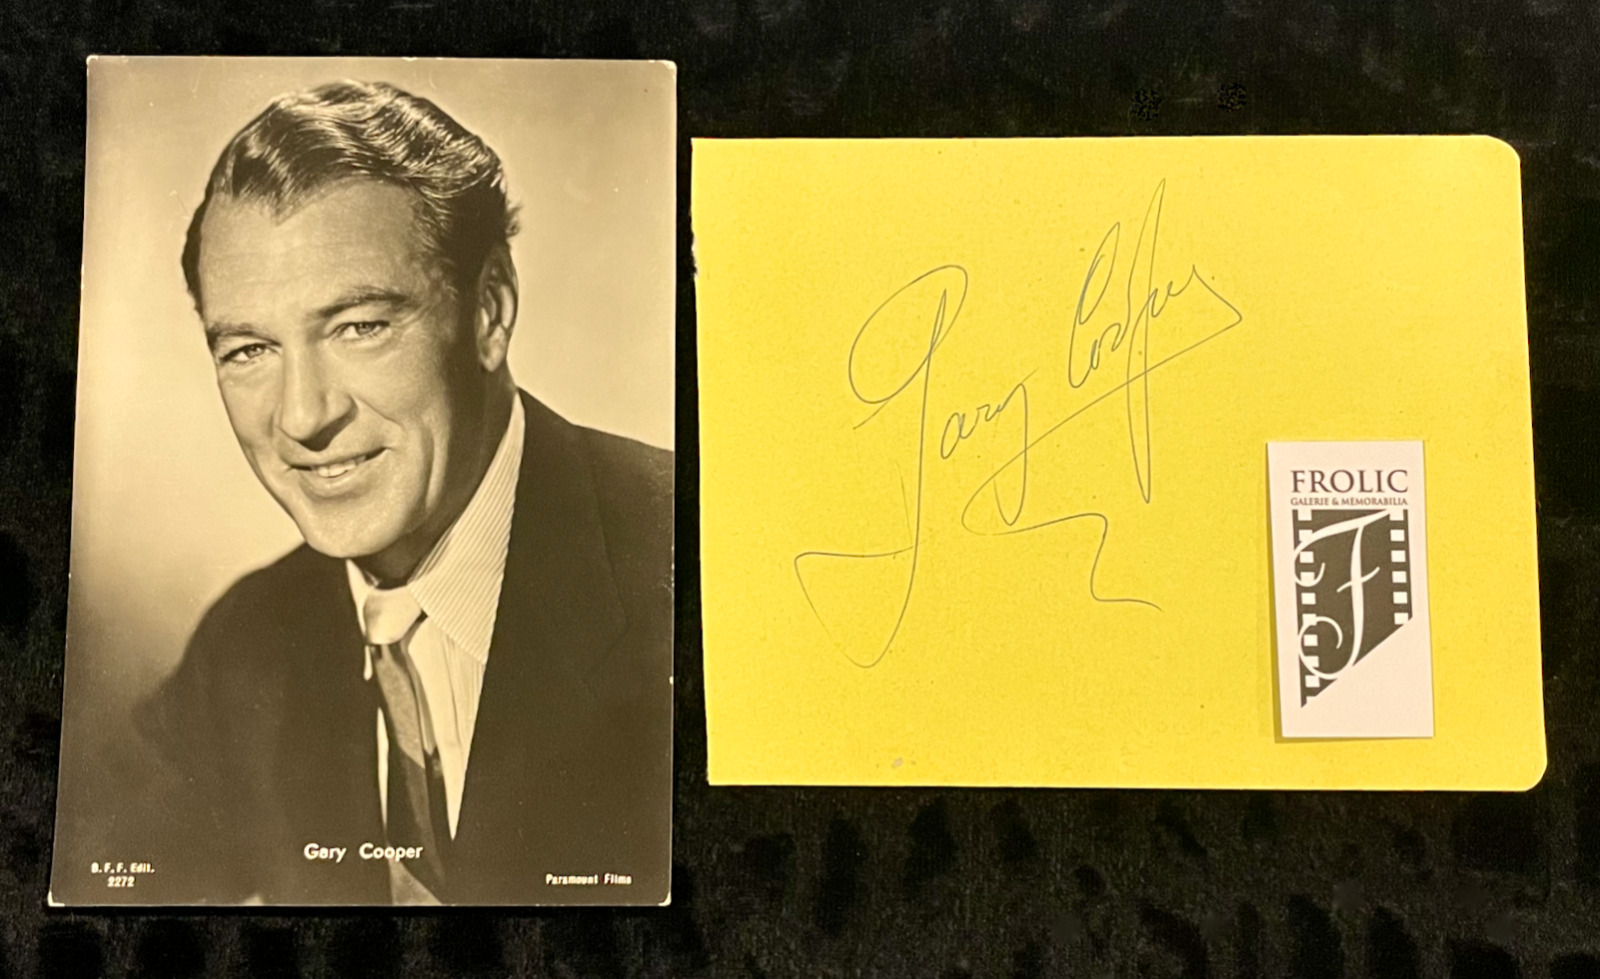 GARY COOPER Signed Original album page, ACA (LOA) American Star Actor 1940-50's